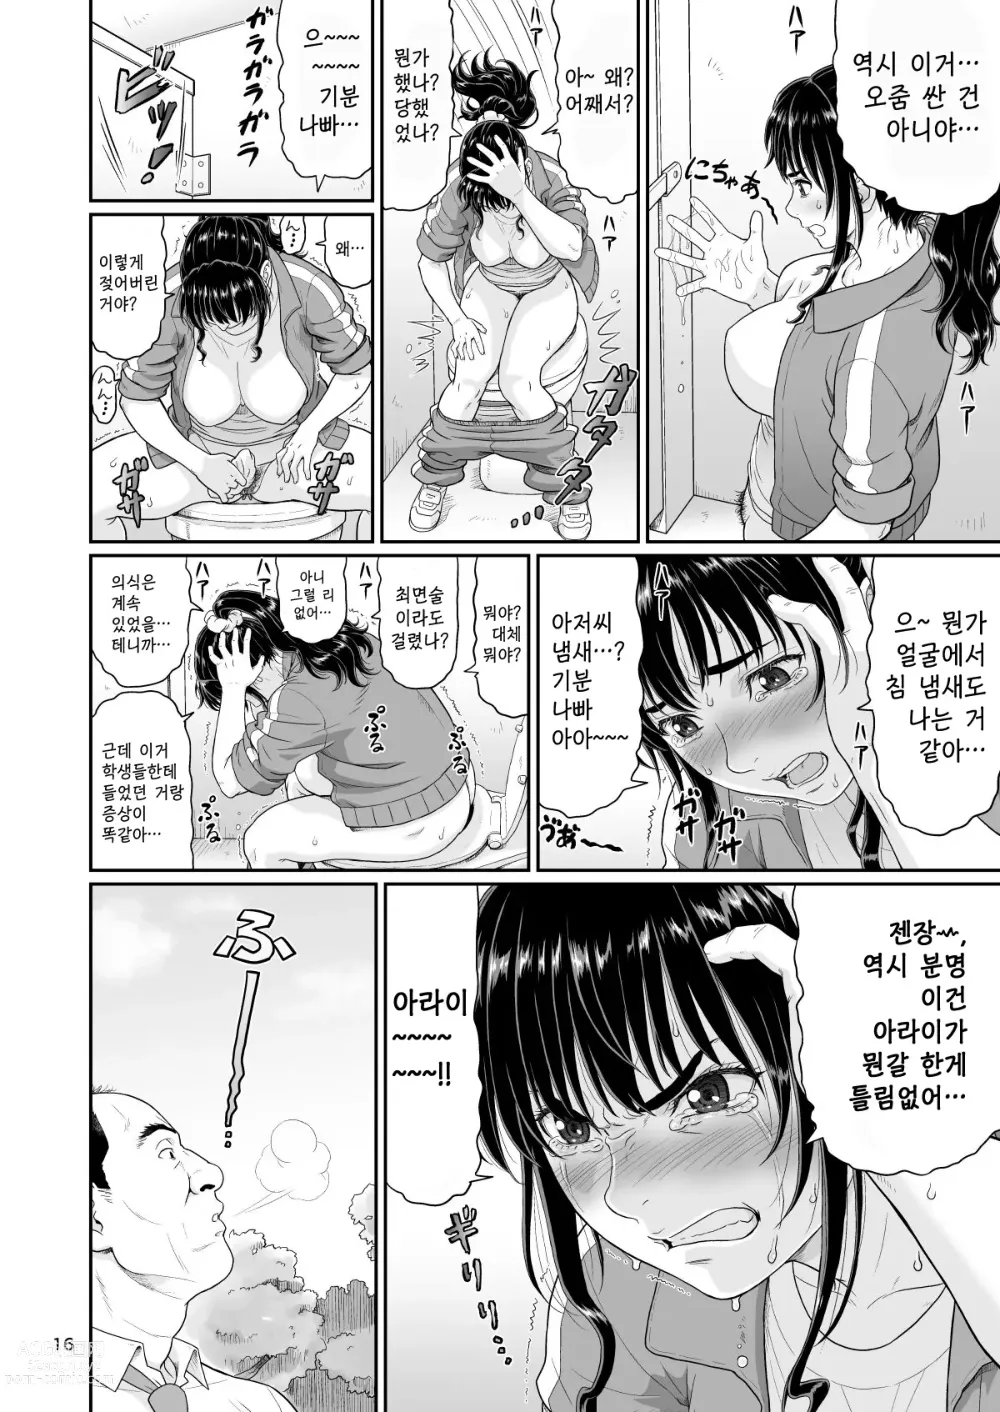 Page 16 of doujinshi 야한 짓 이외에 시간을 멈춰선 안된다구요 2